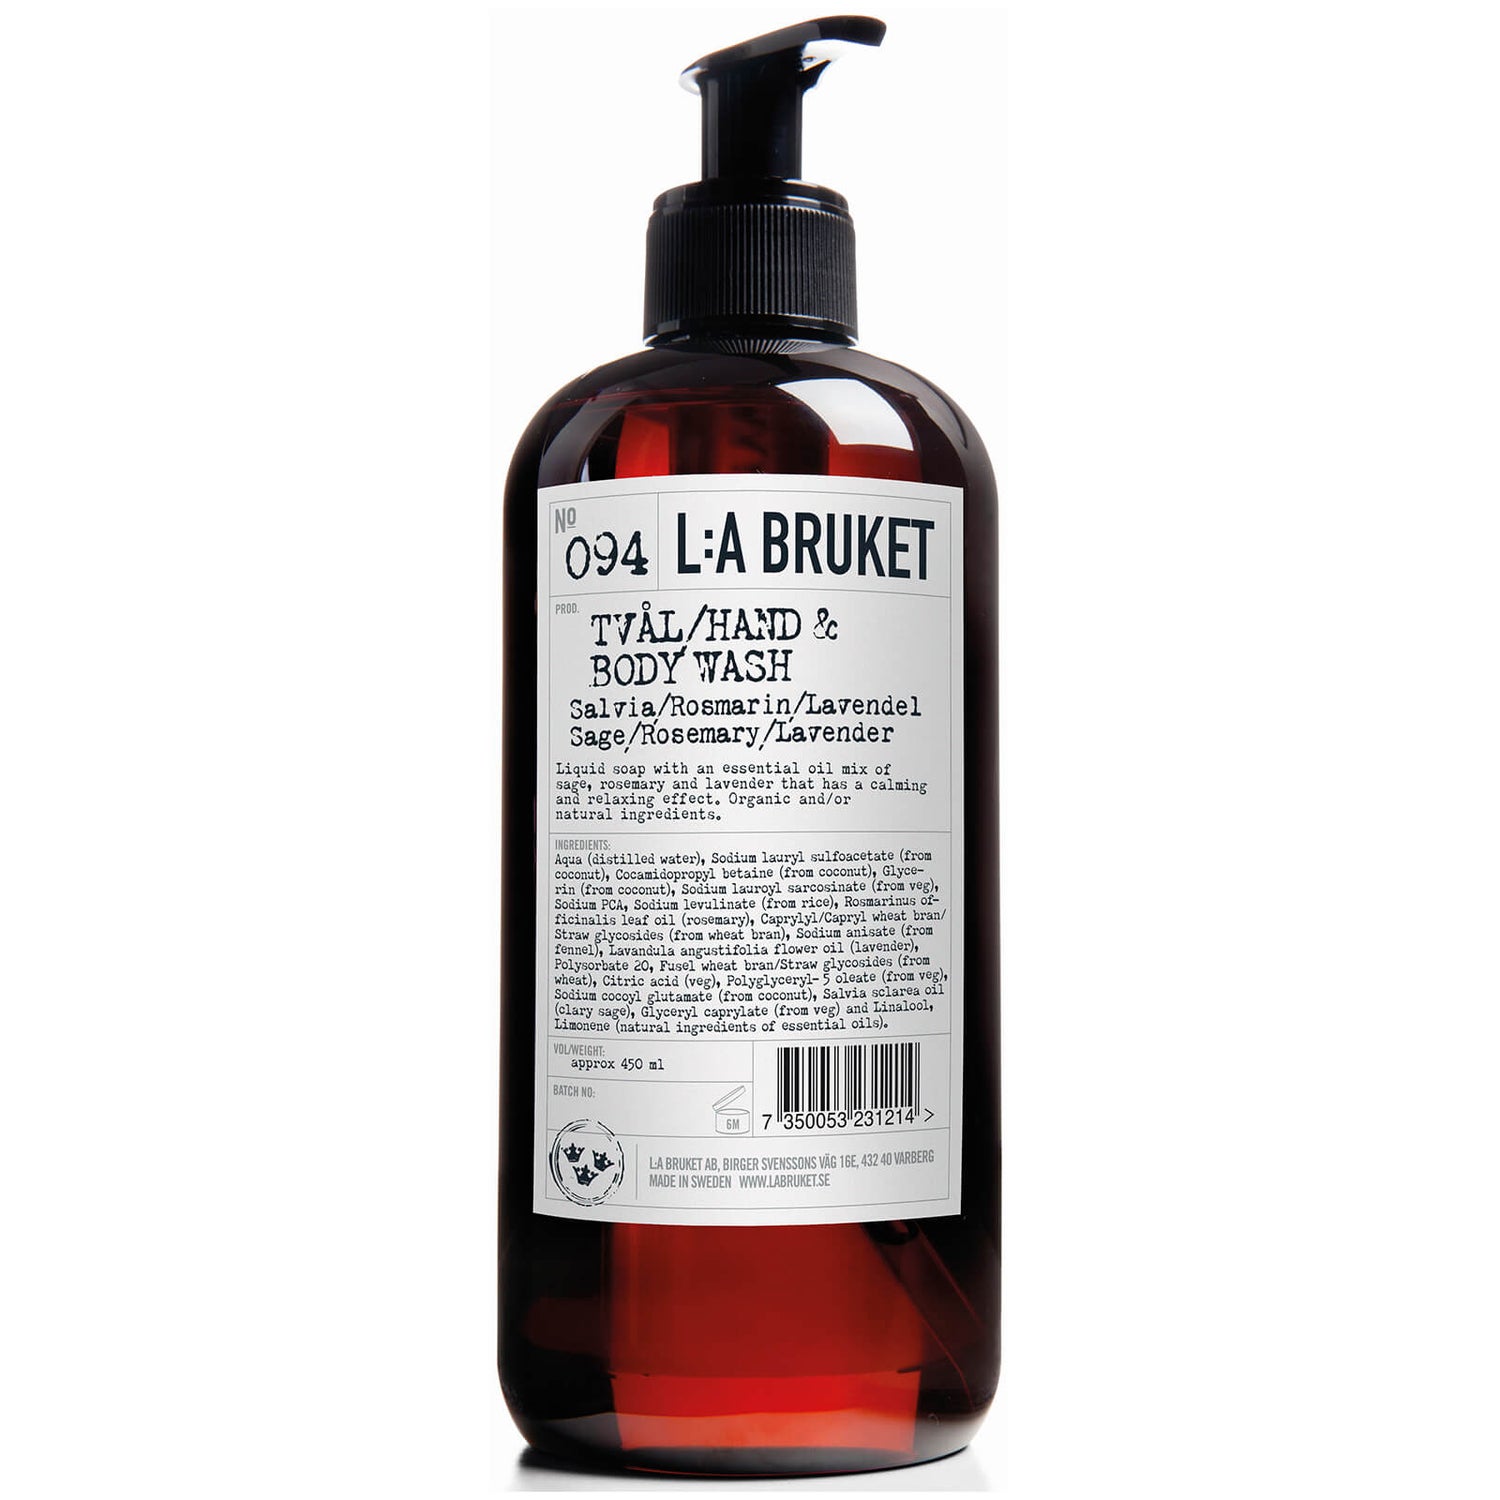 L:A BRUKET No. 094 Hand & Body Wash 450ml - Sage/Rosemary/Lavender